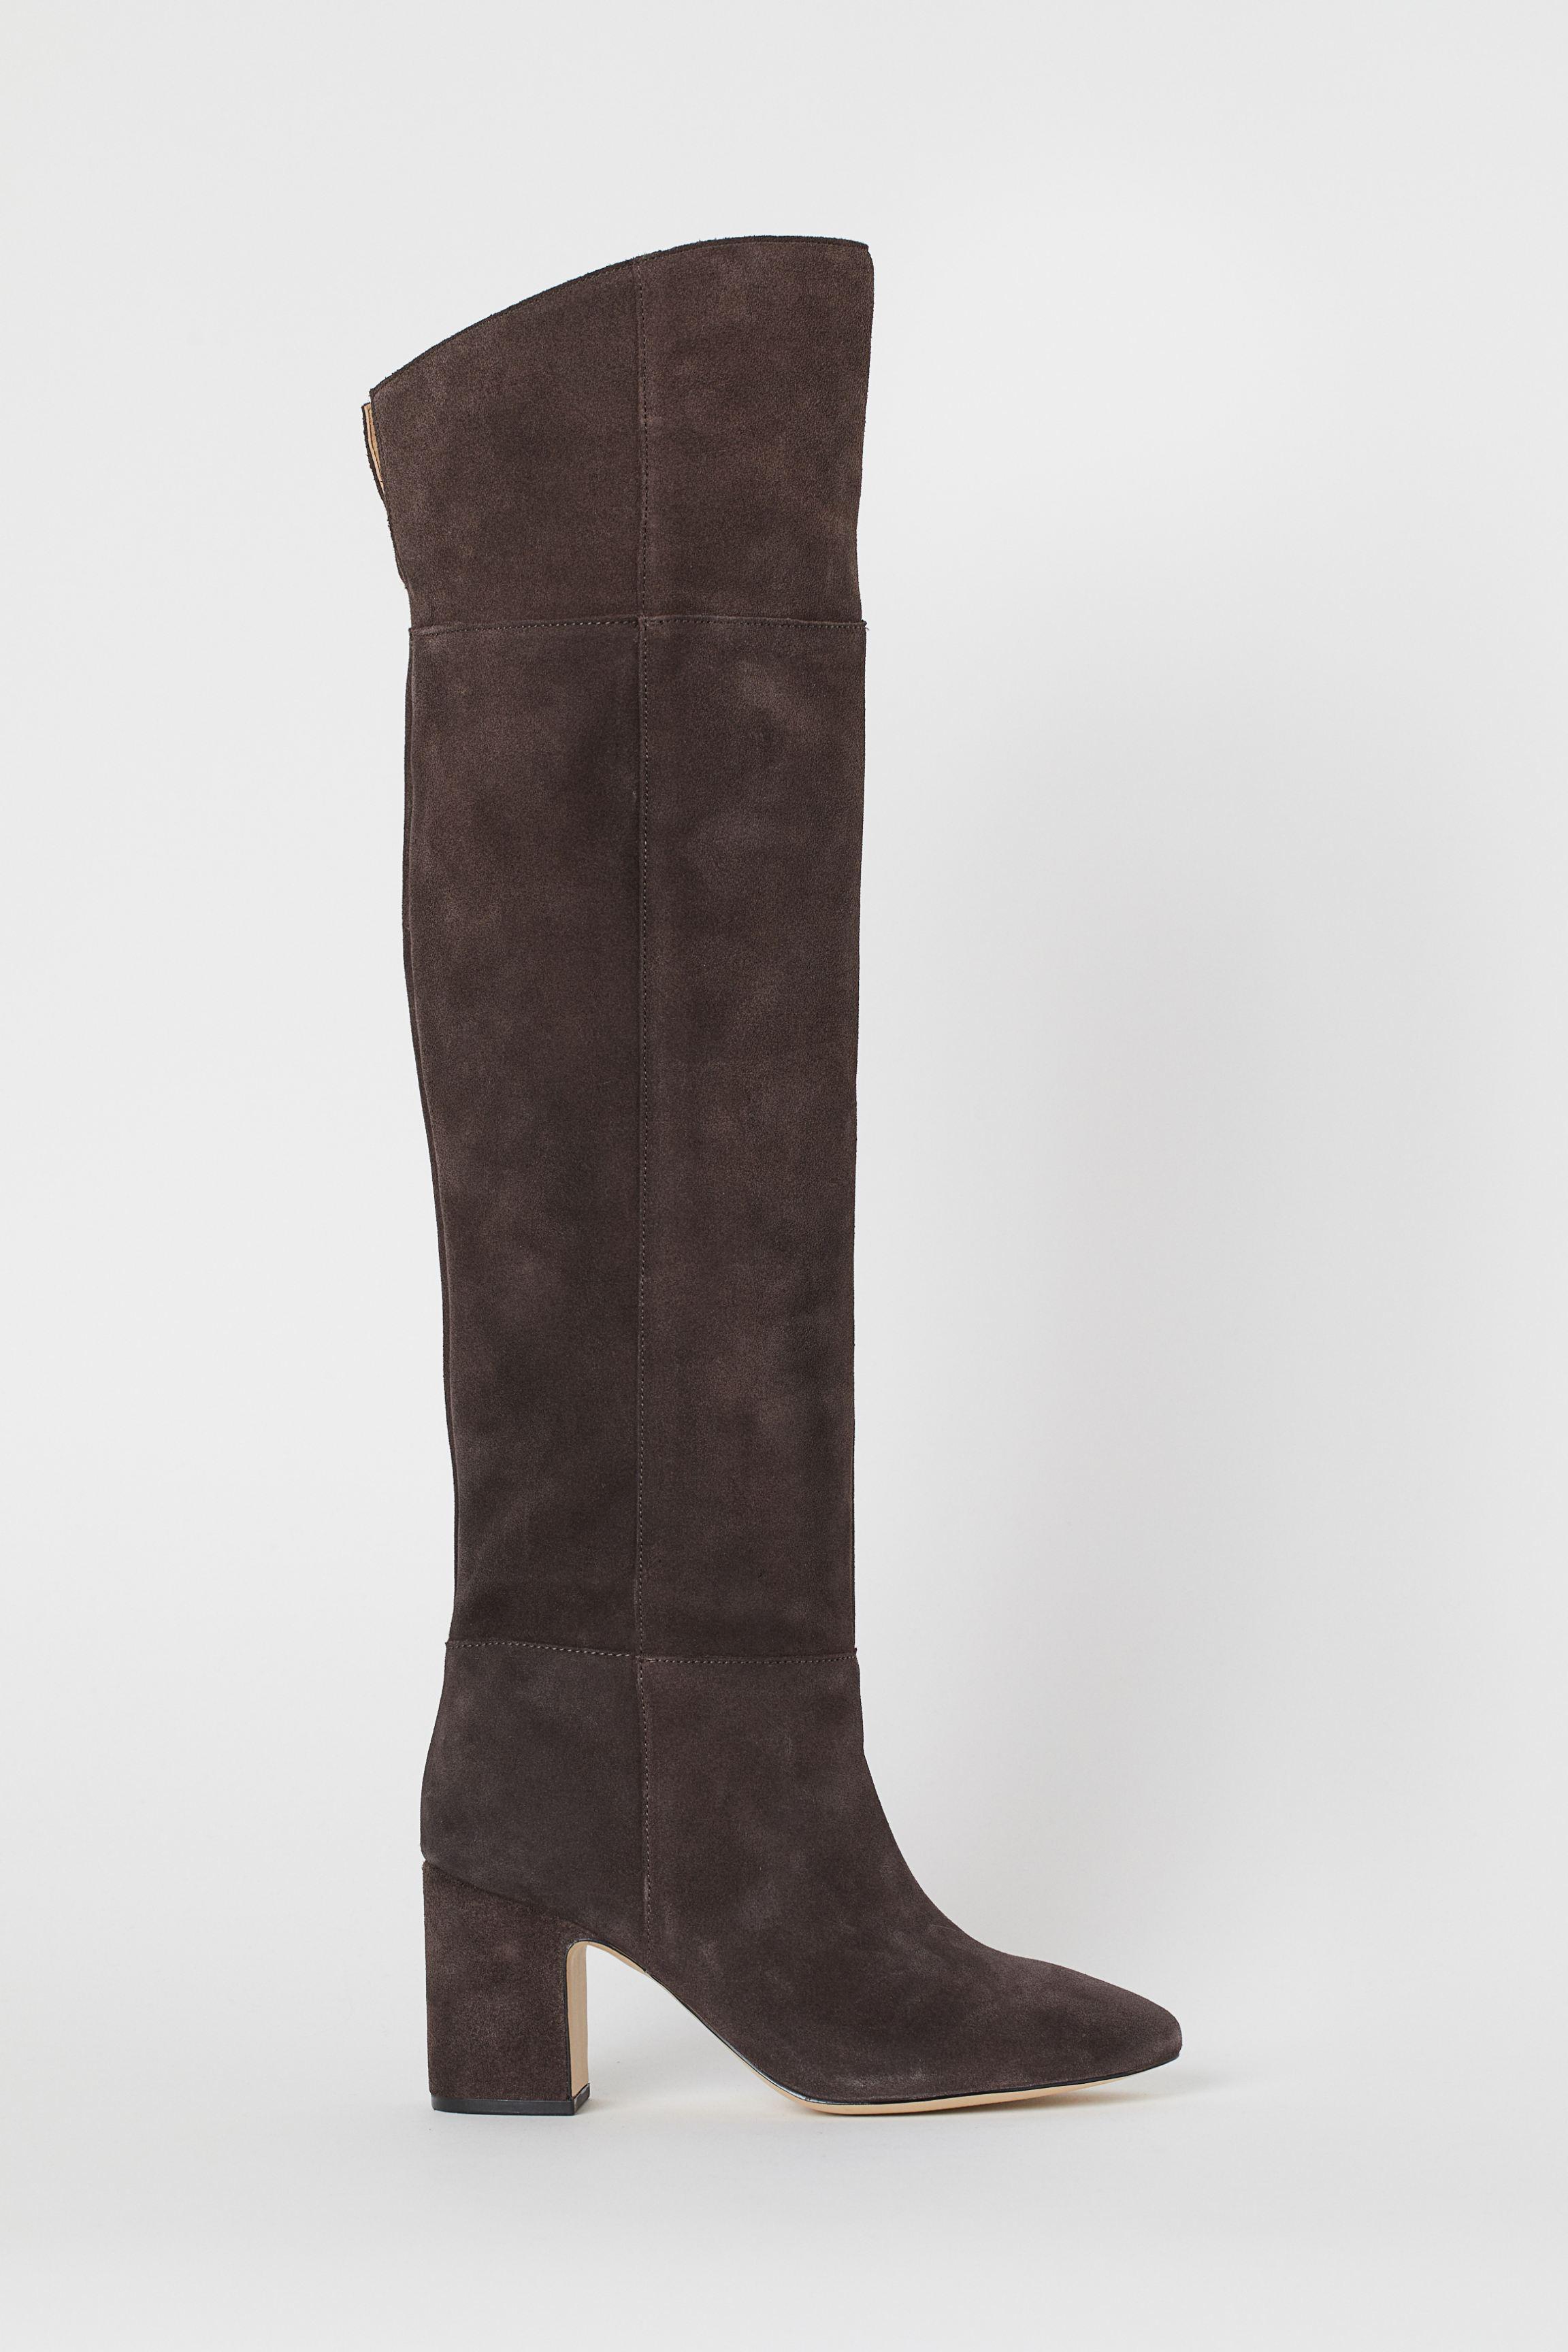 H&M Suede Knee-high Boots in Dark Brown (Brown) - Lyst